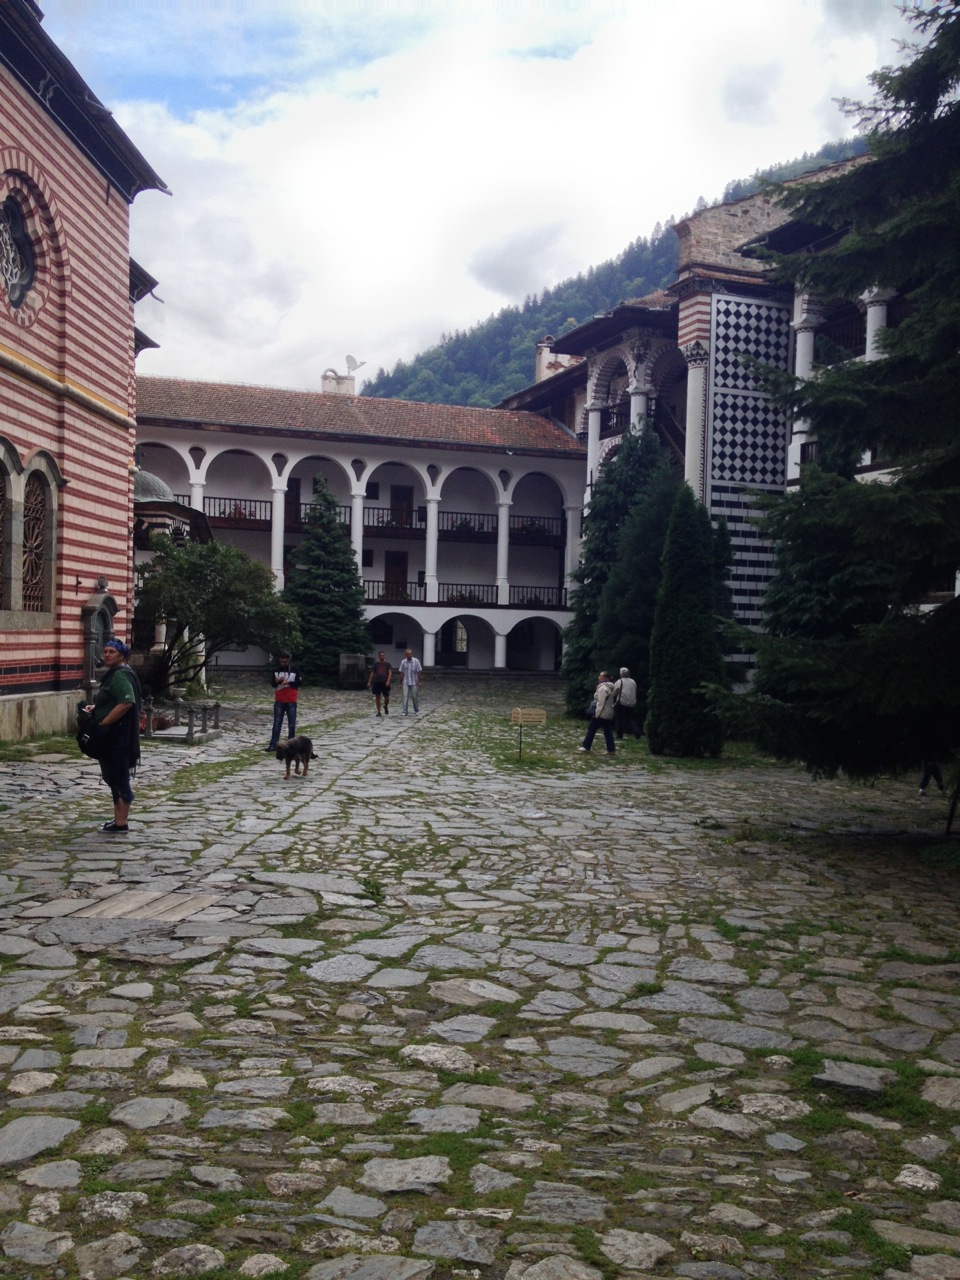 Rila Monastery